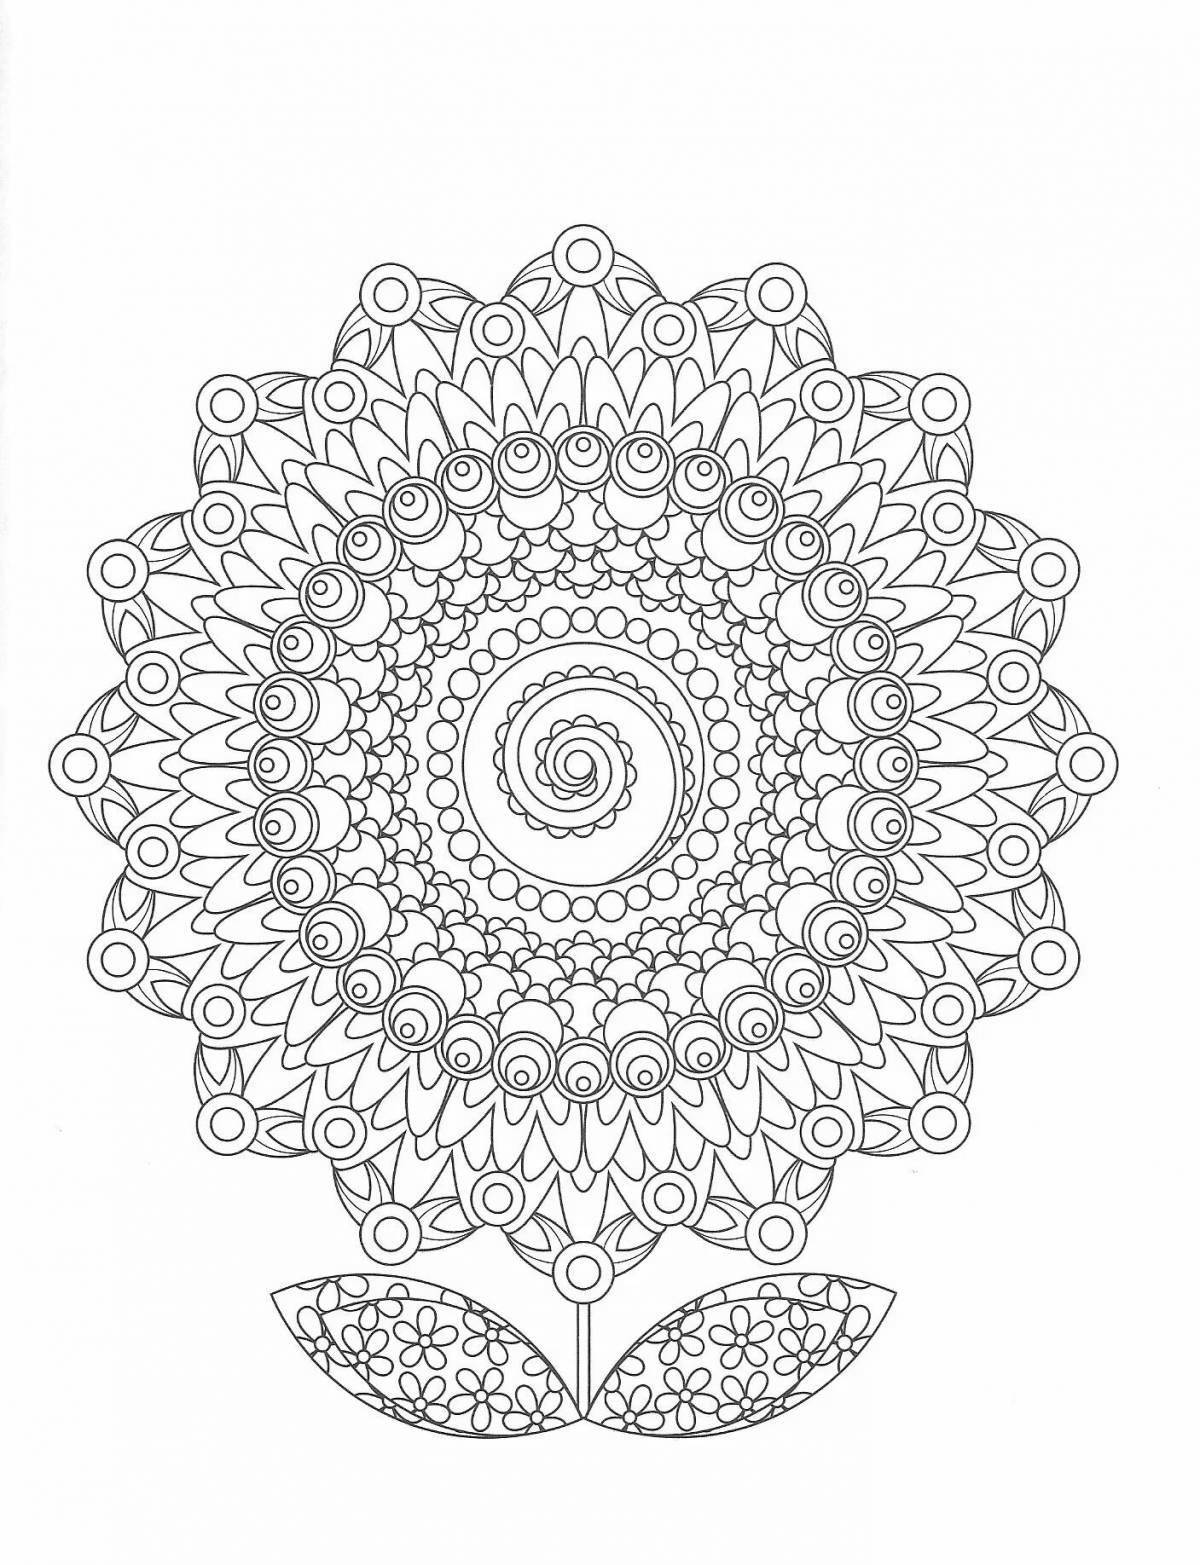 Radiant coloring page video meditative mandala antistress